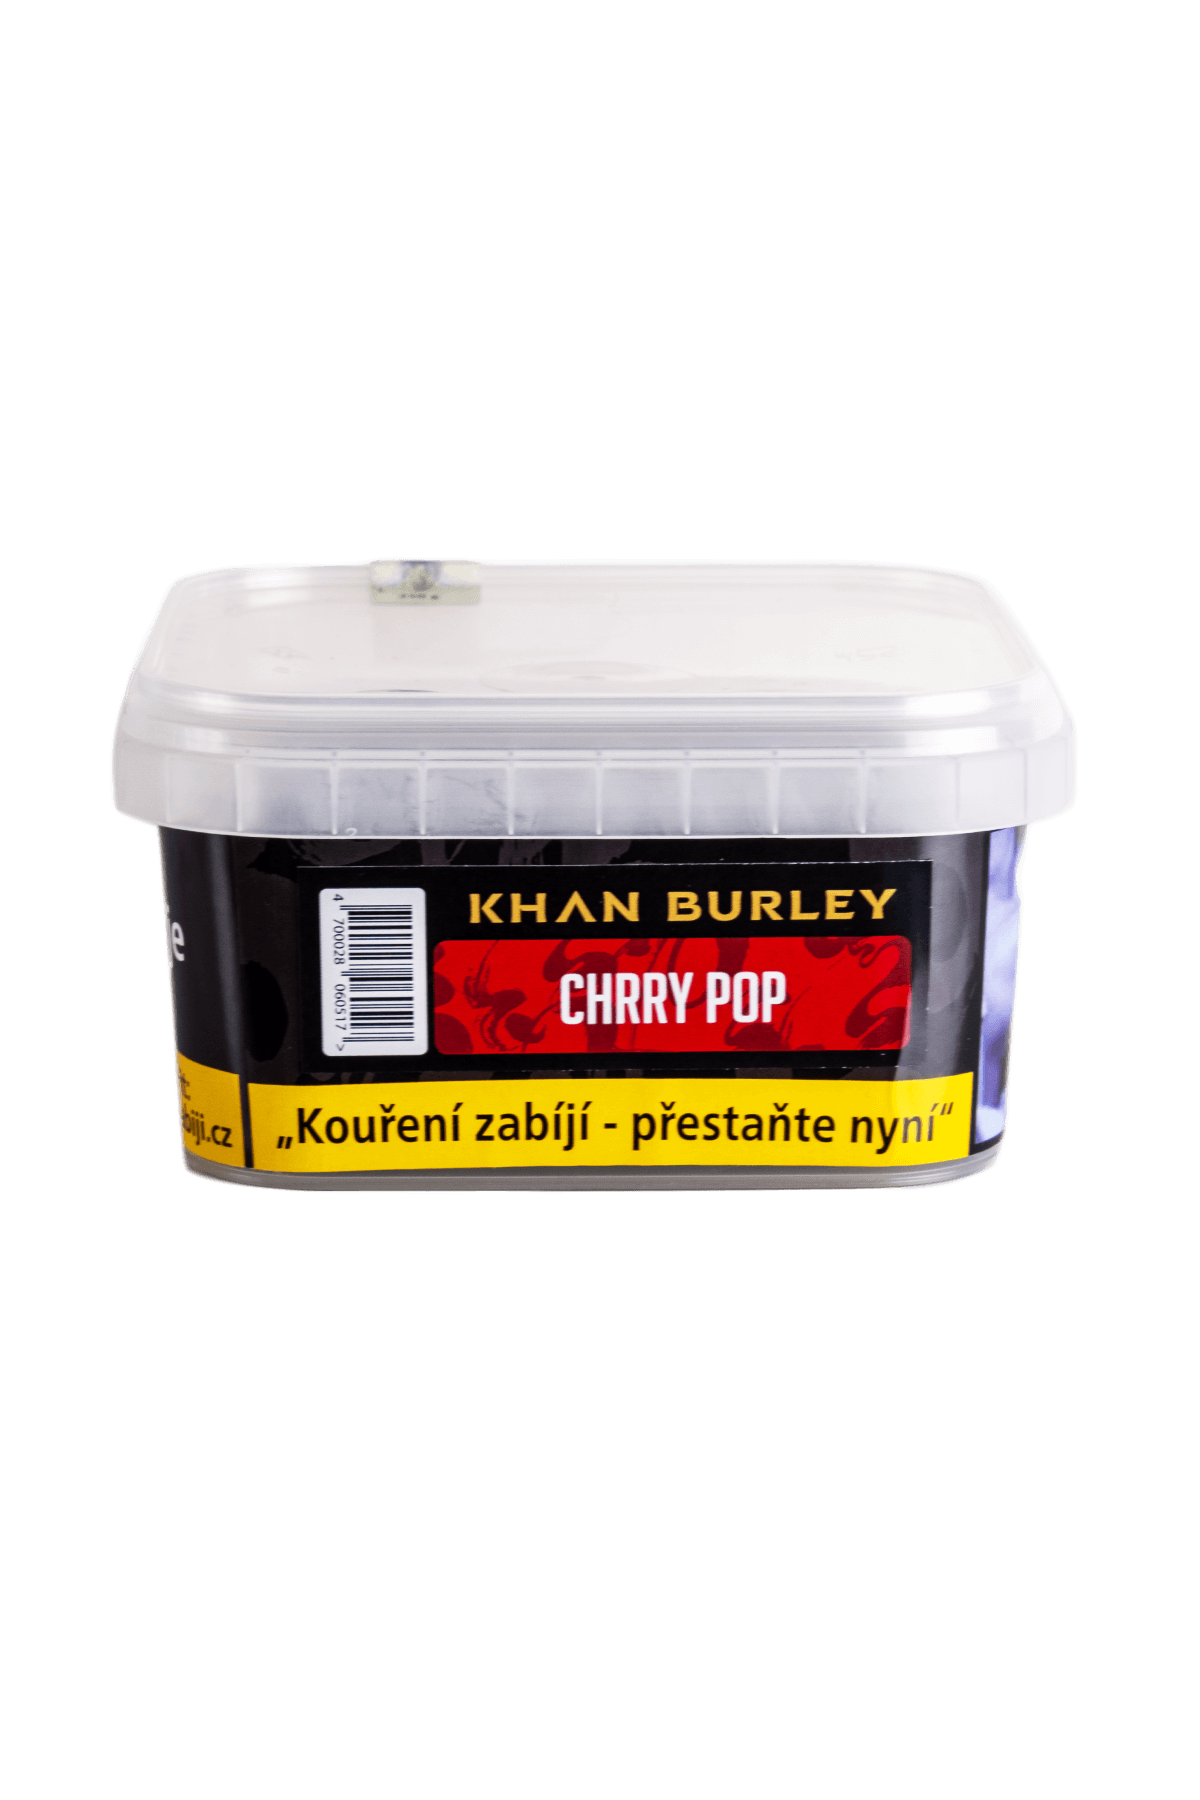 Tabák - Khan Burley 250g - Cherry Pop